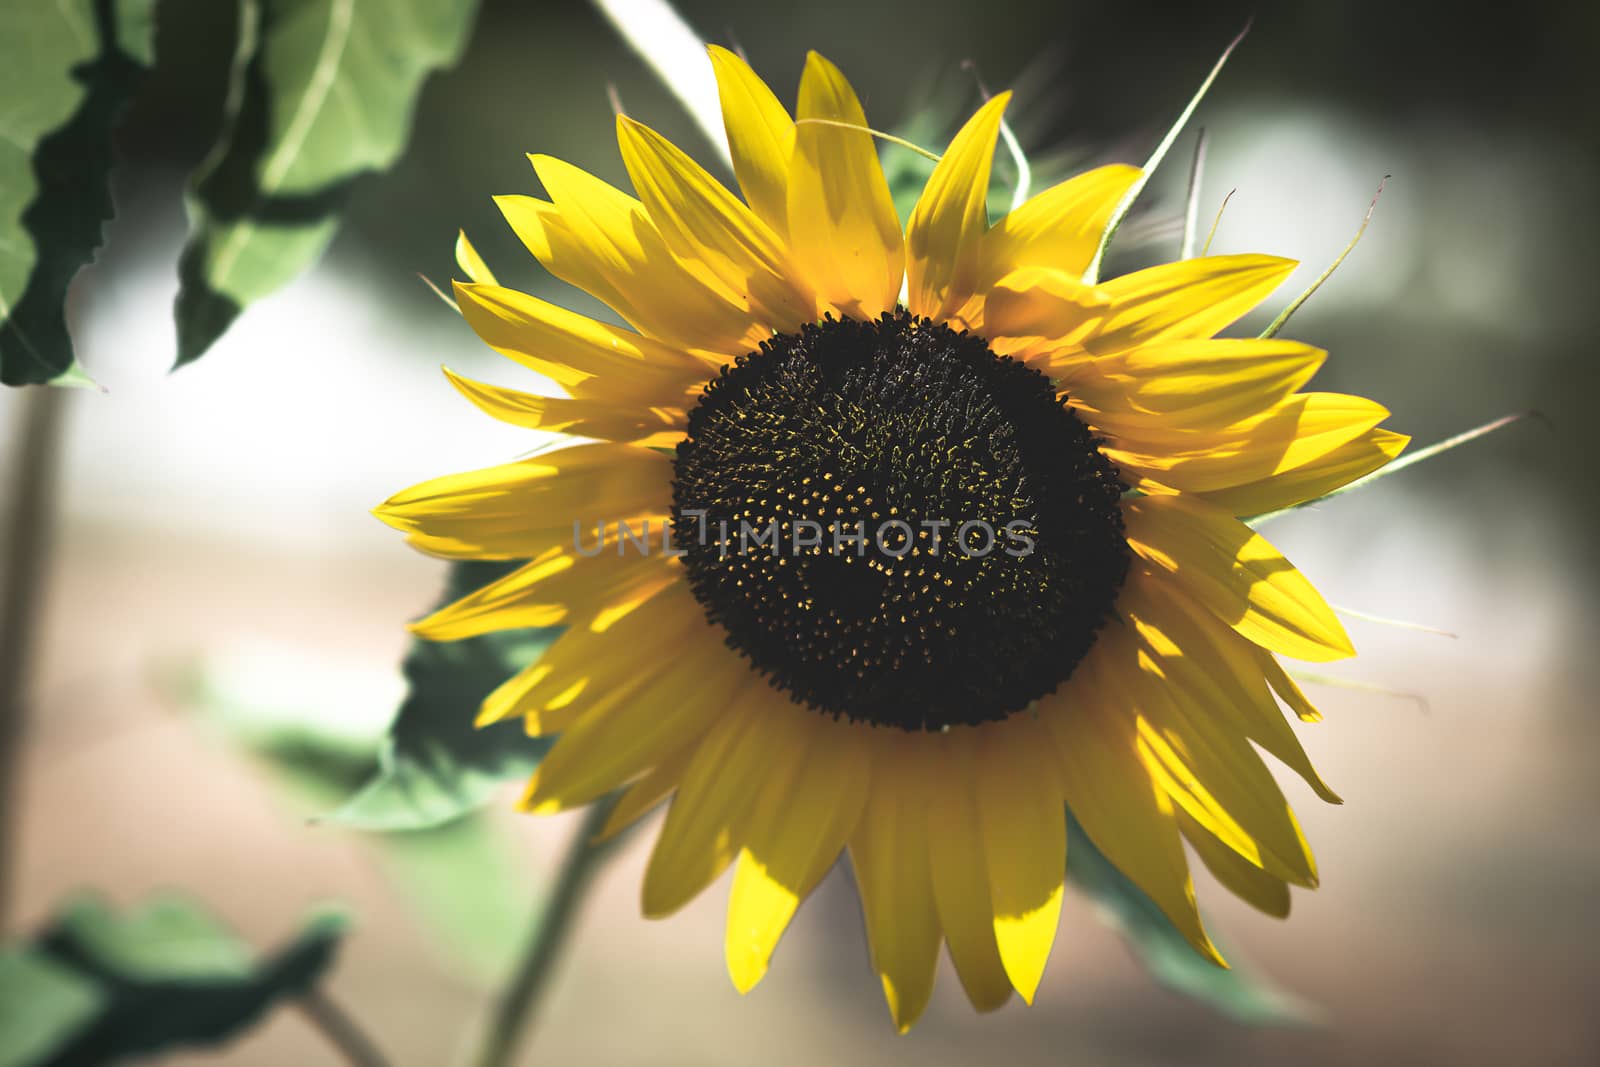 Sunflower blossom by cedicocinovo